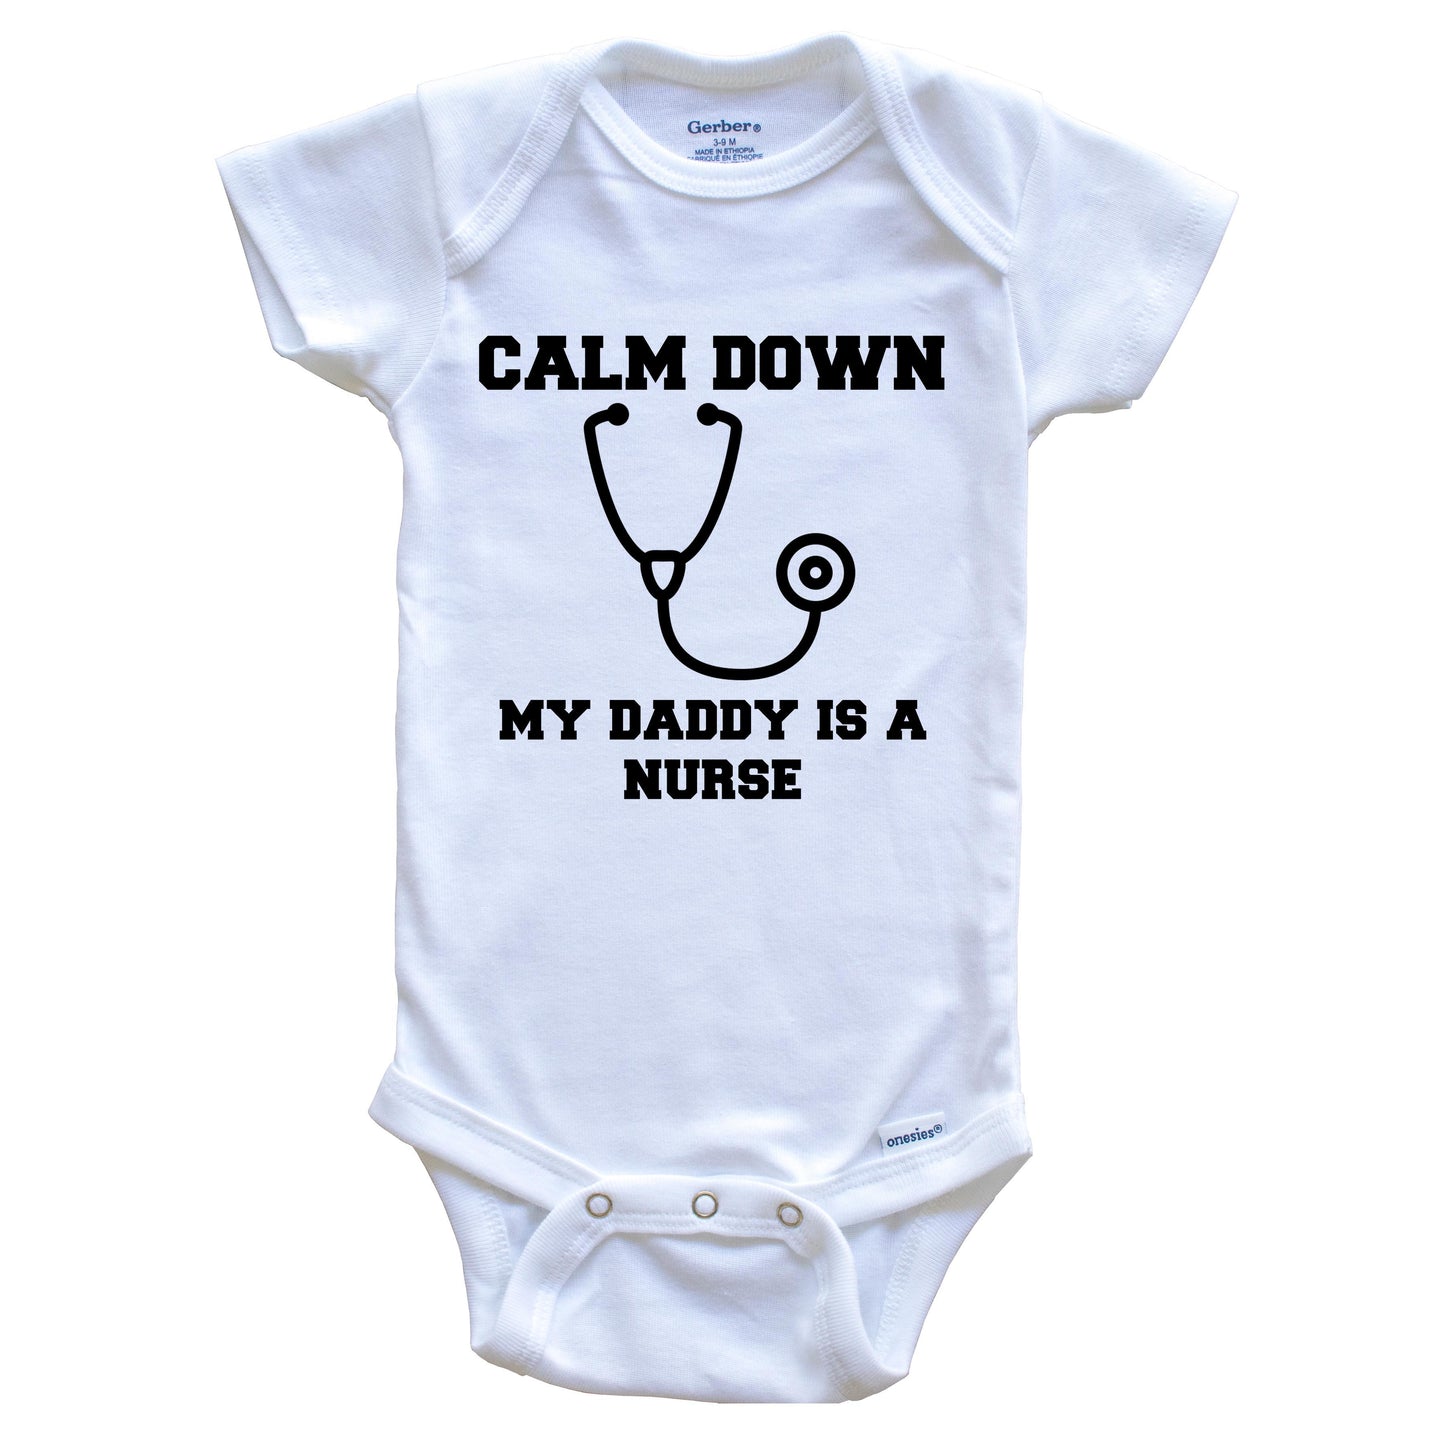 Calm Down My Daddy Is A Nurse Funny Baby Onesie - One Piece Baby Bodysuit